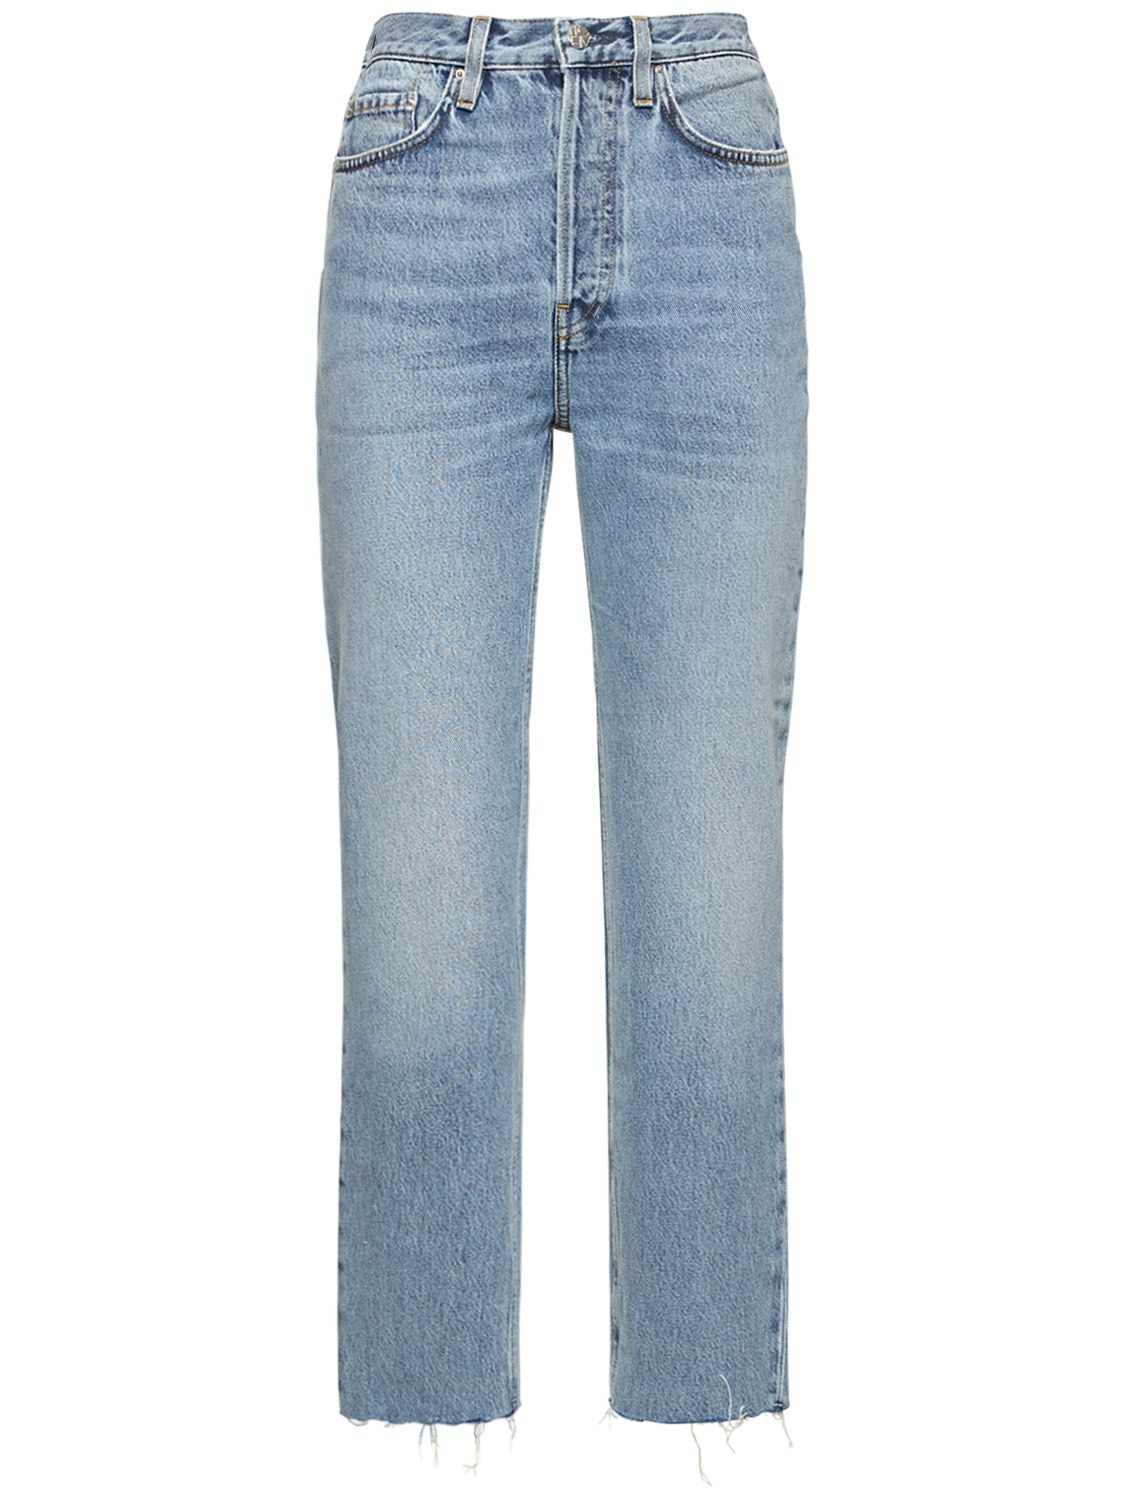 Image of Organic Cotton Denim Classic Cut Jeans